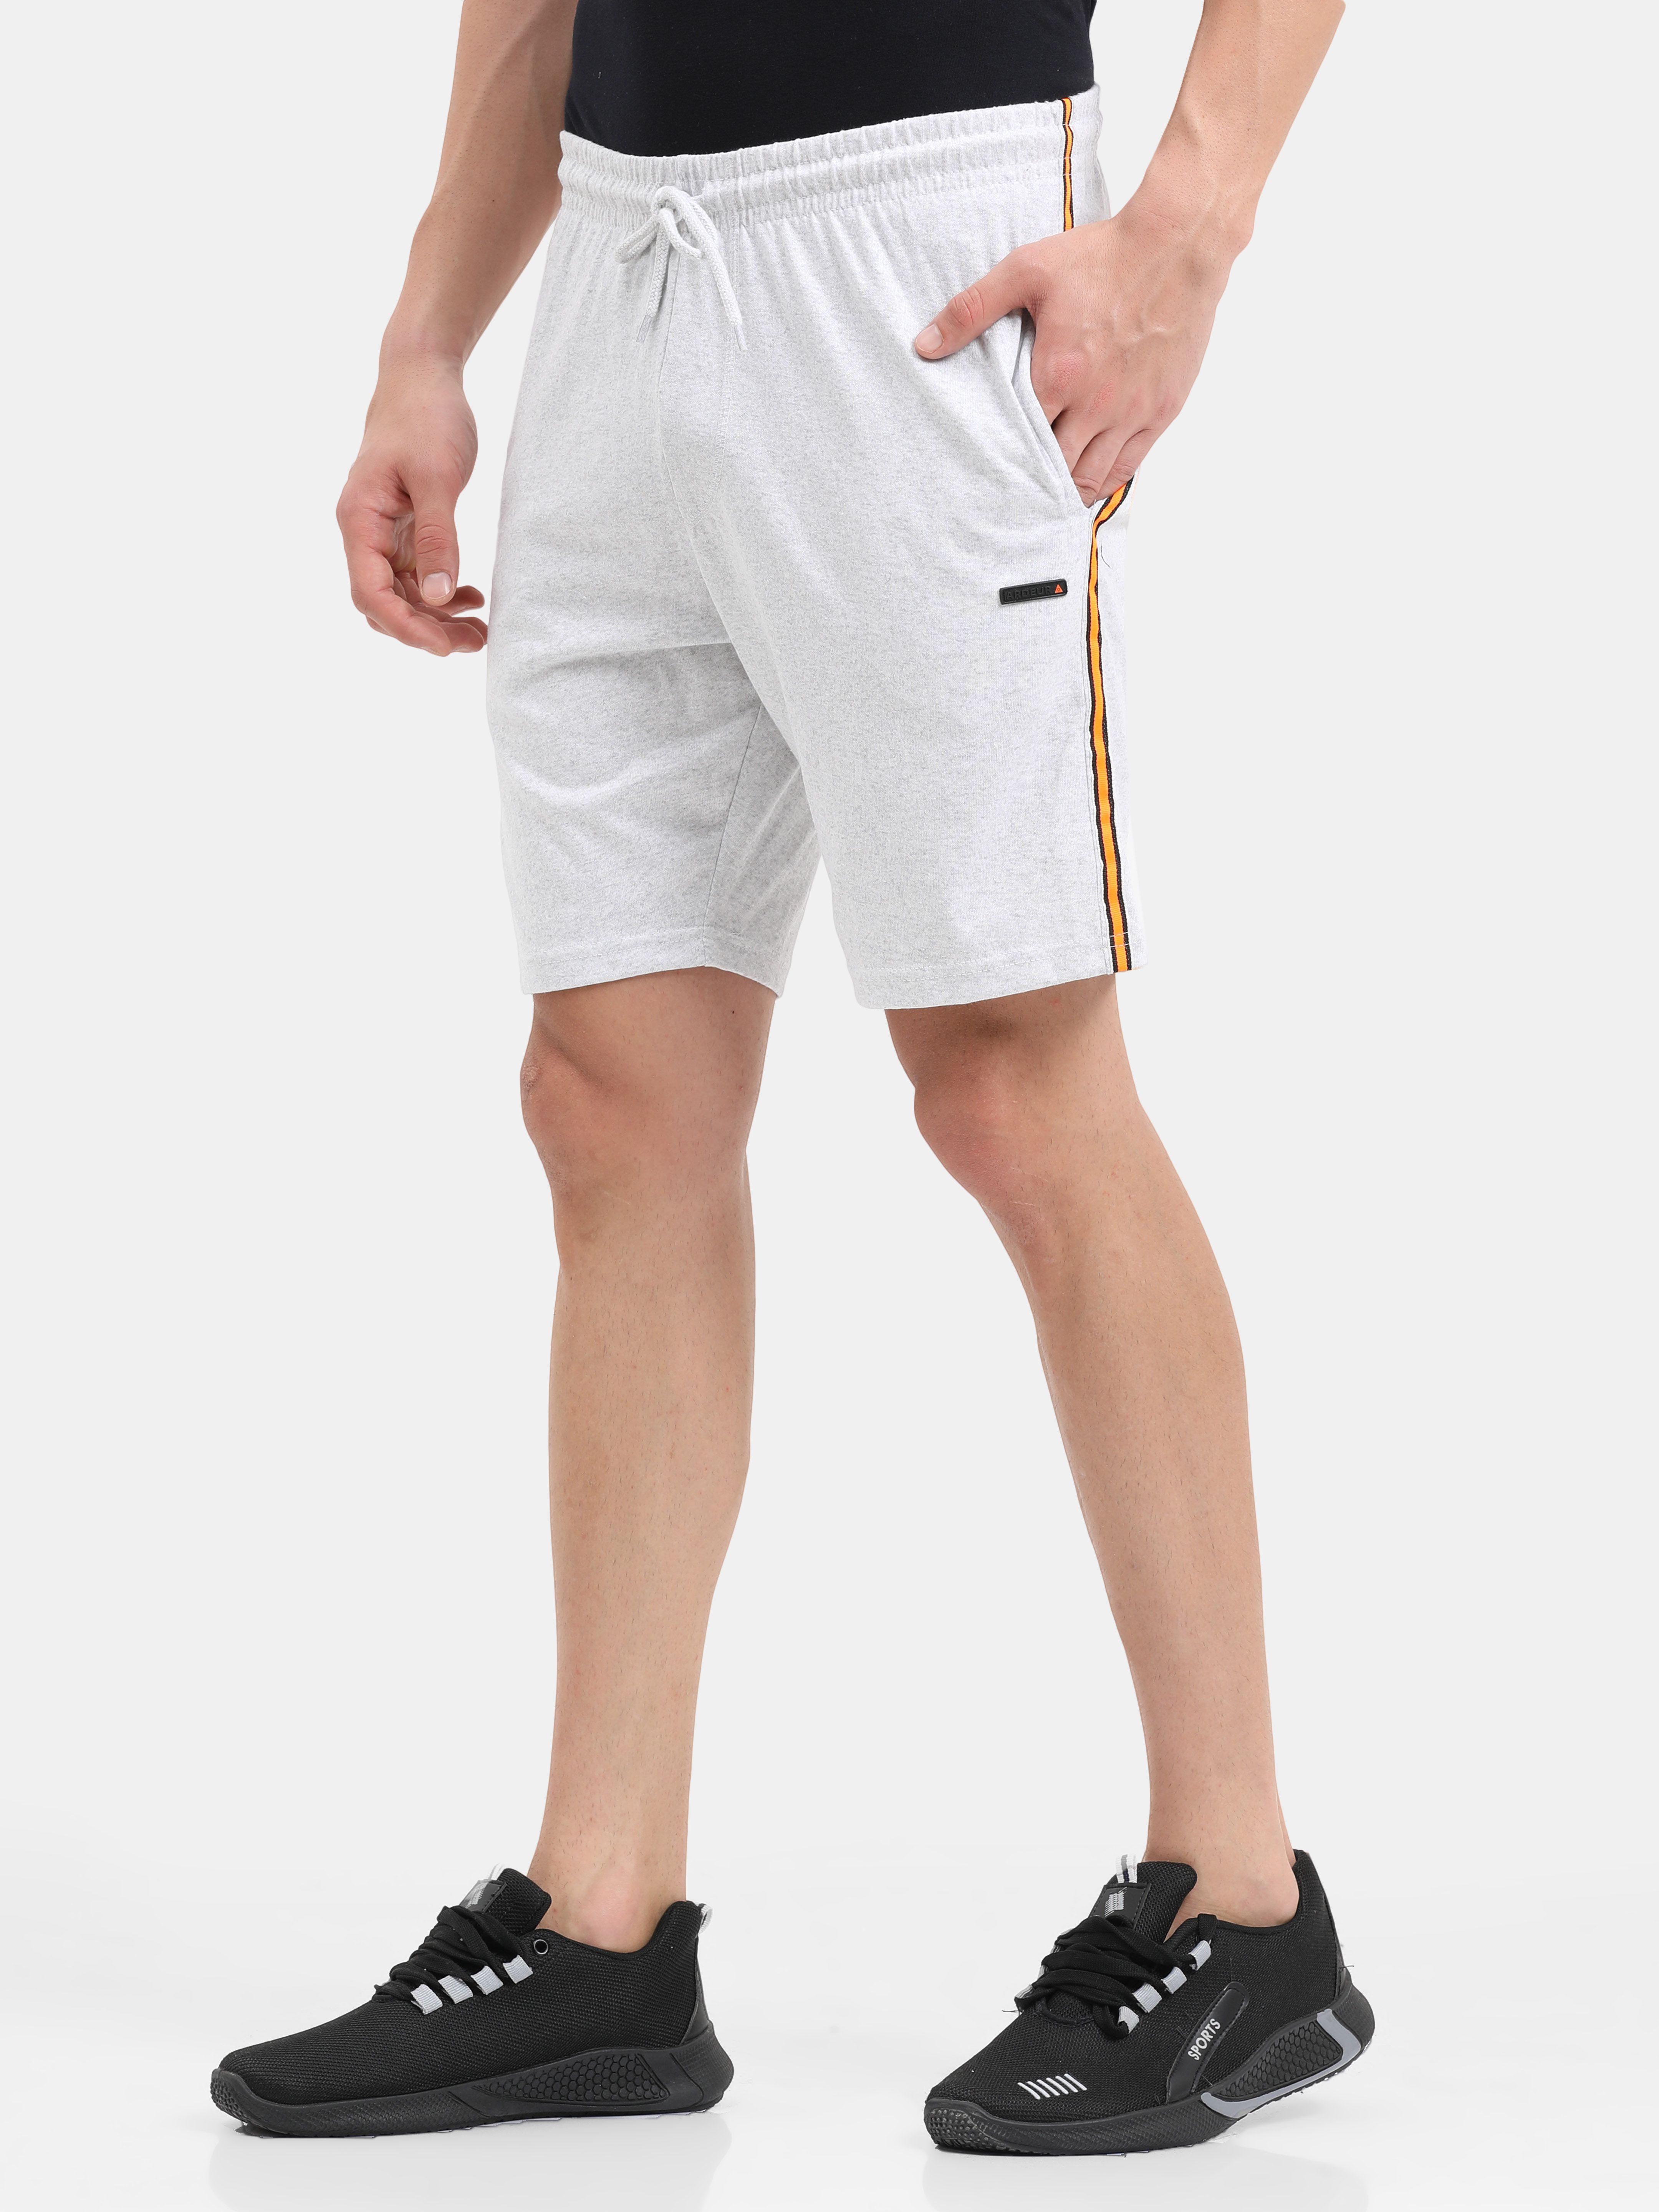     			Ardeur - Off White Cotton Blend Men's Shorts ( Pack of 1 )